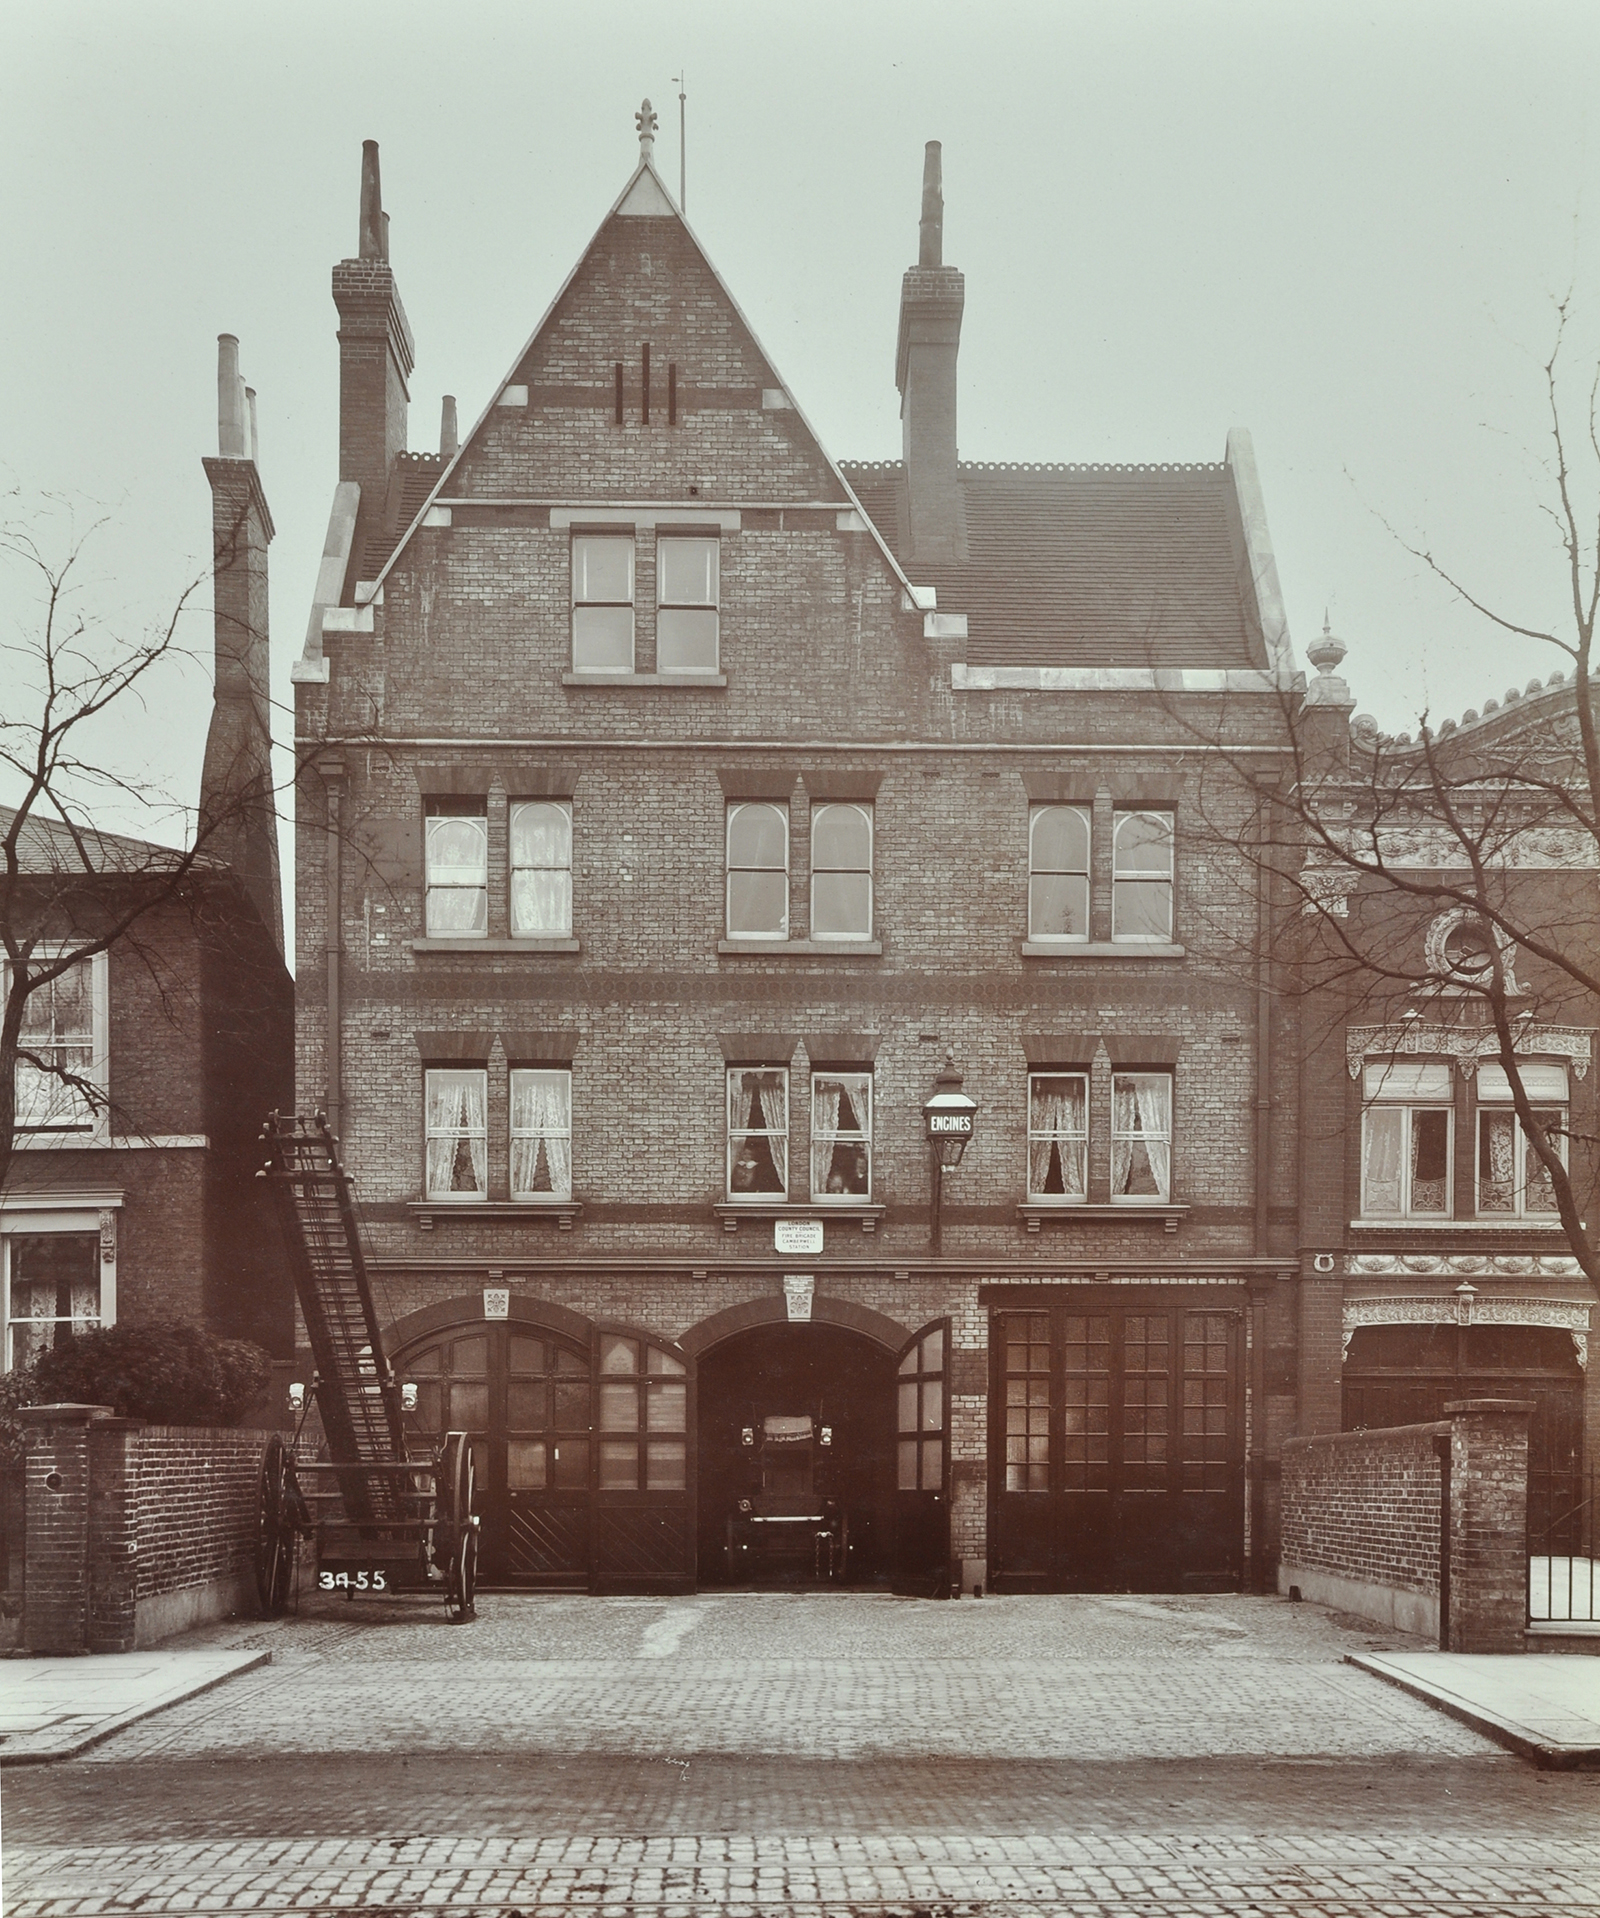 Peckham Road Fire Station, 1905. London Metropolitan Archives, City of London.